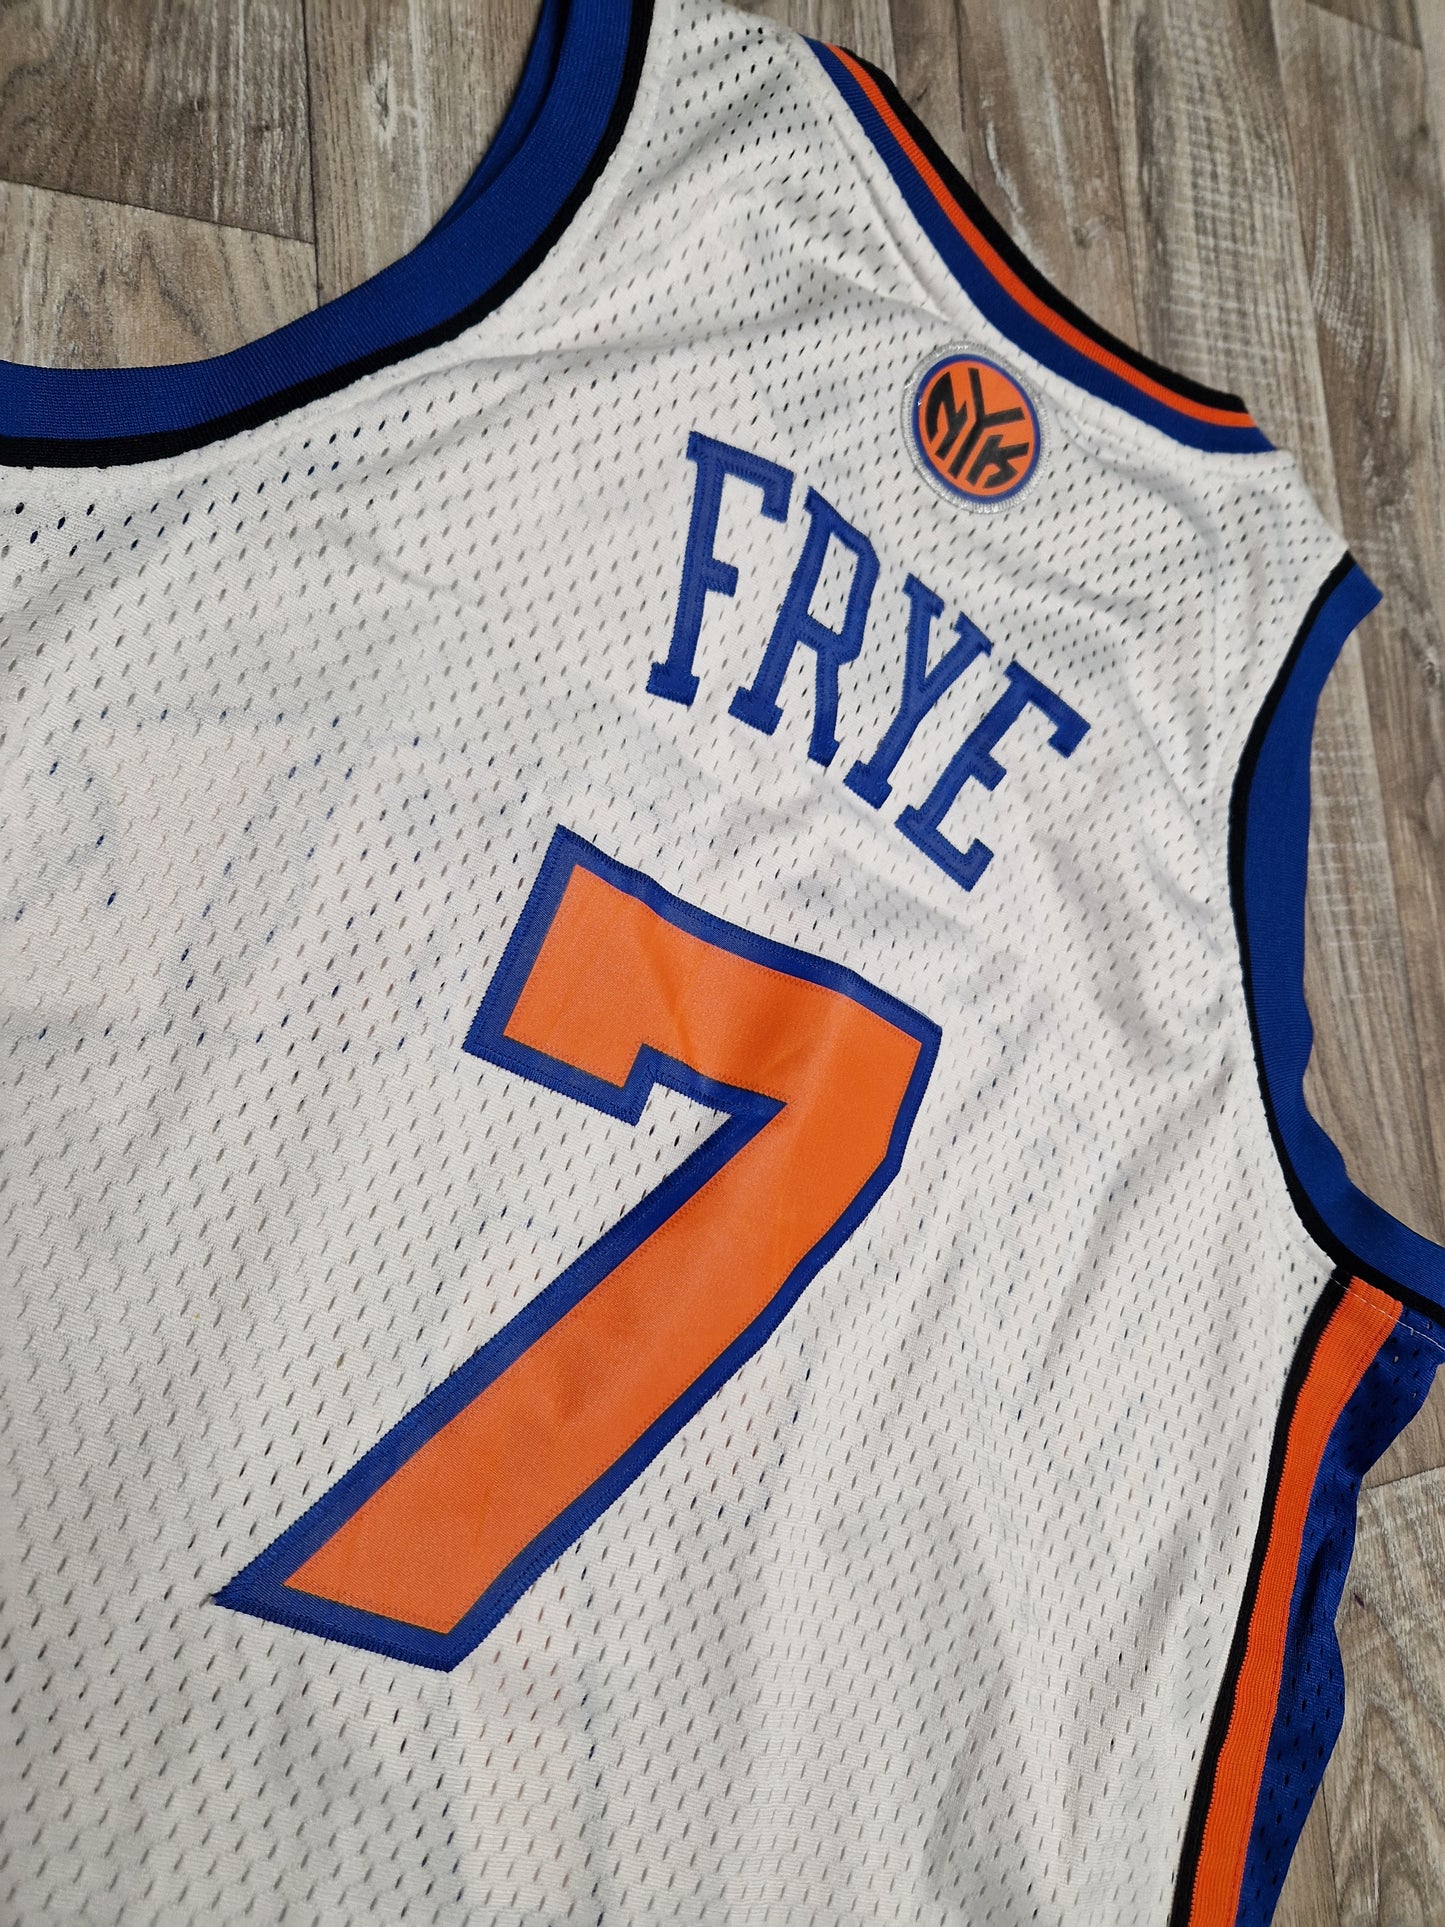 Courtney Frye New York Knicks Jersey Size Medium